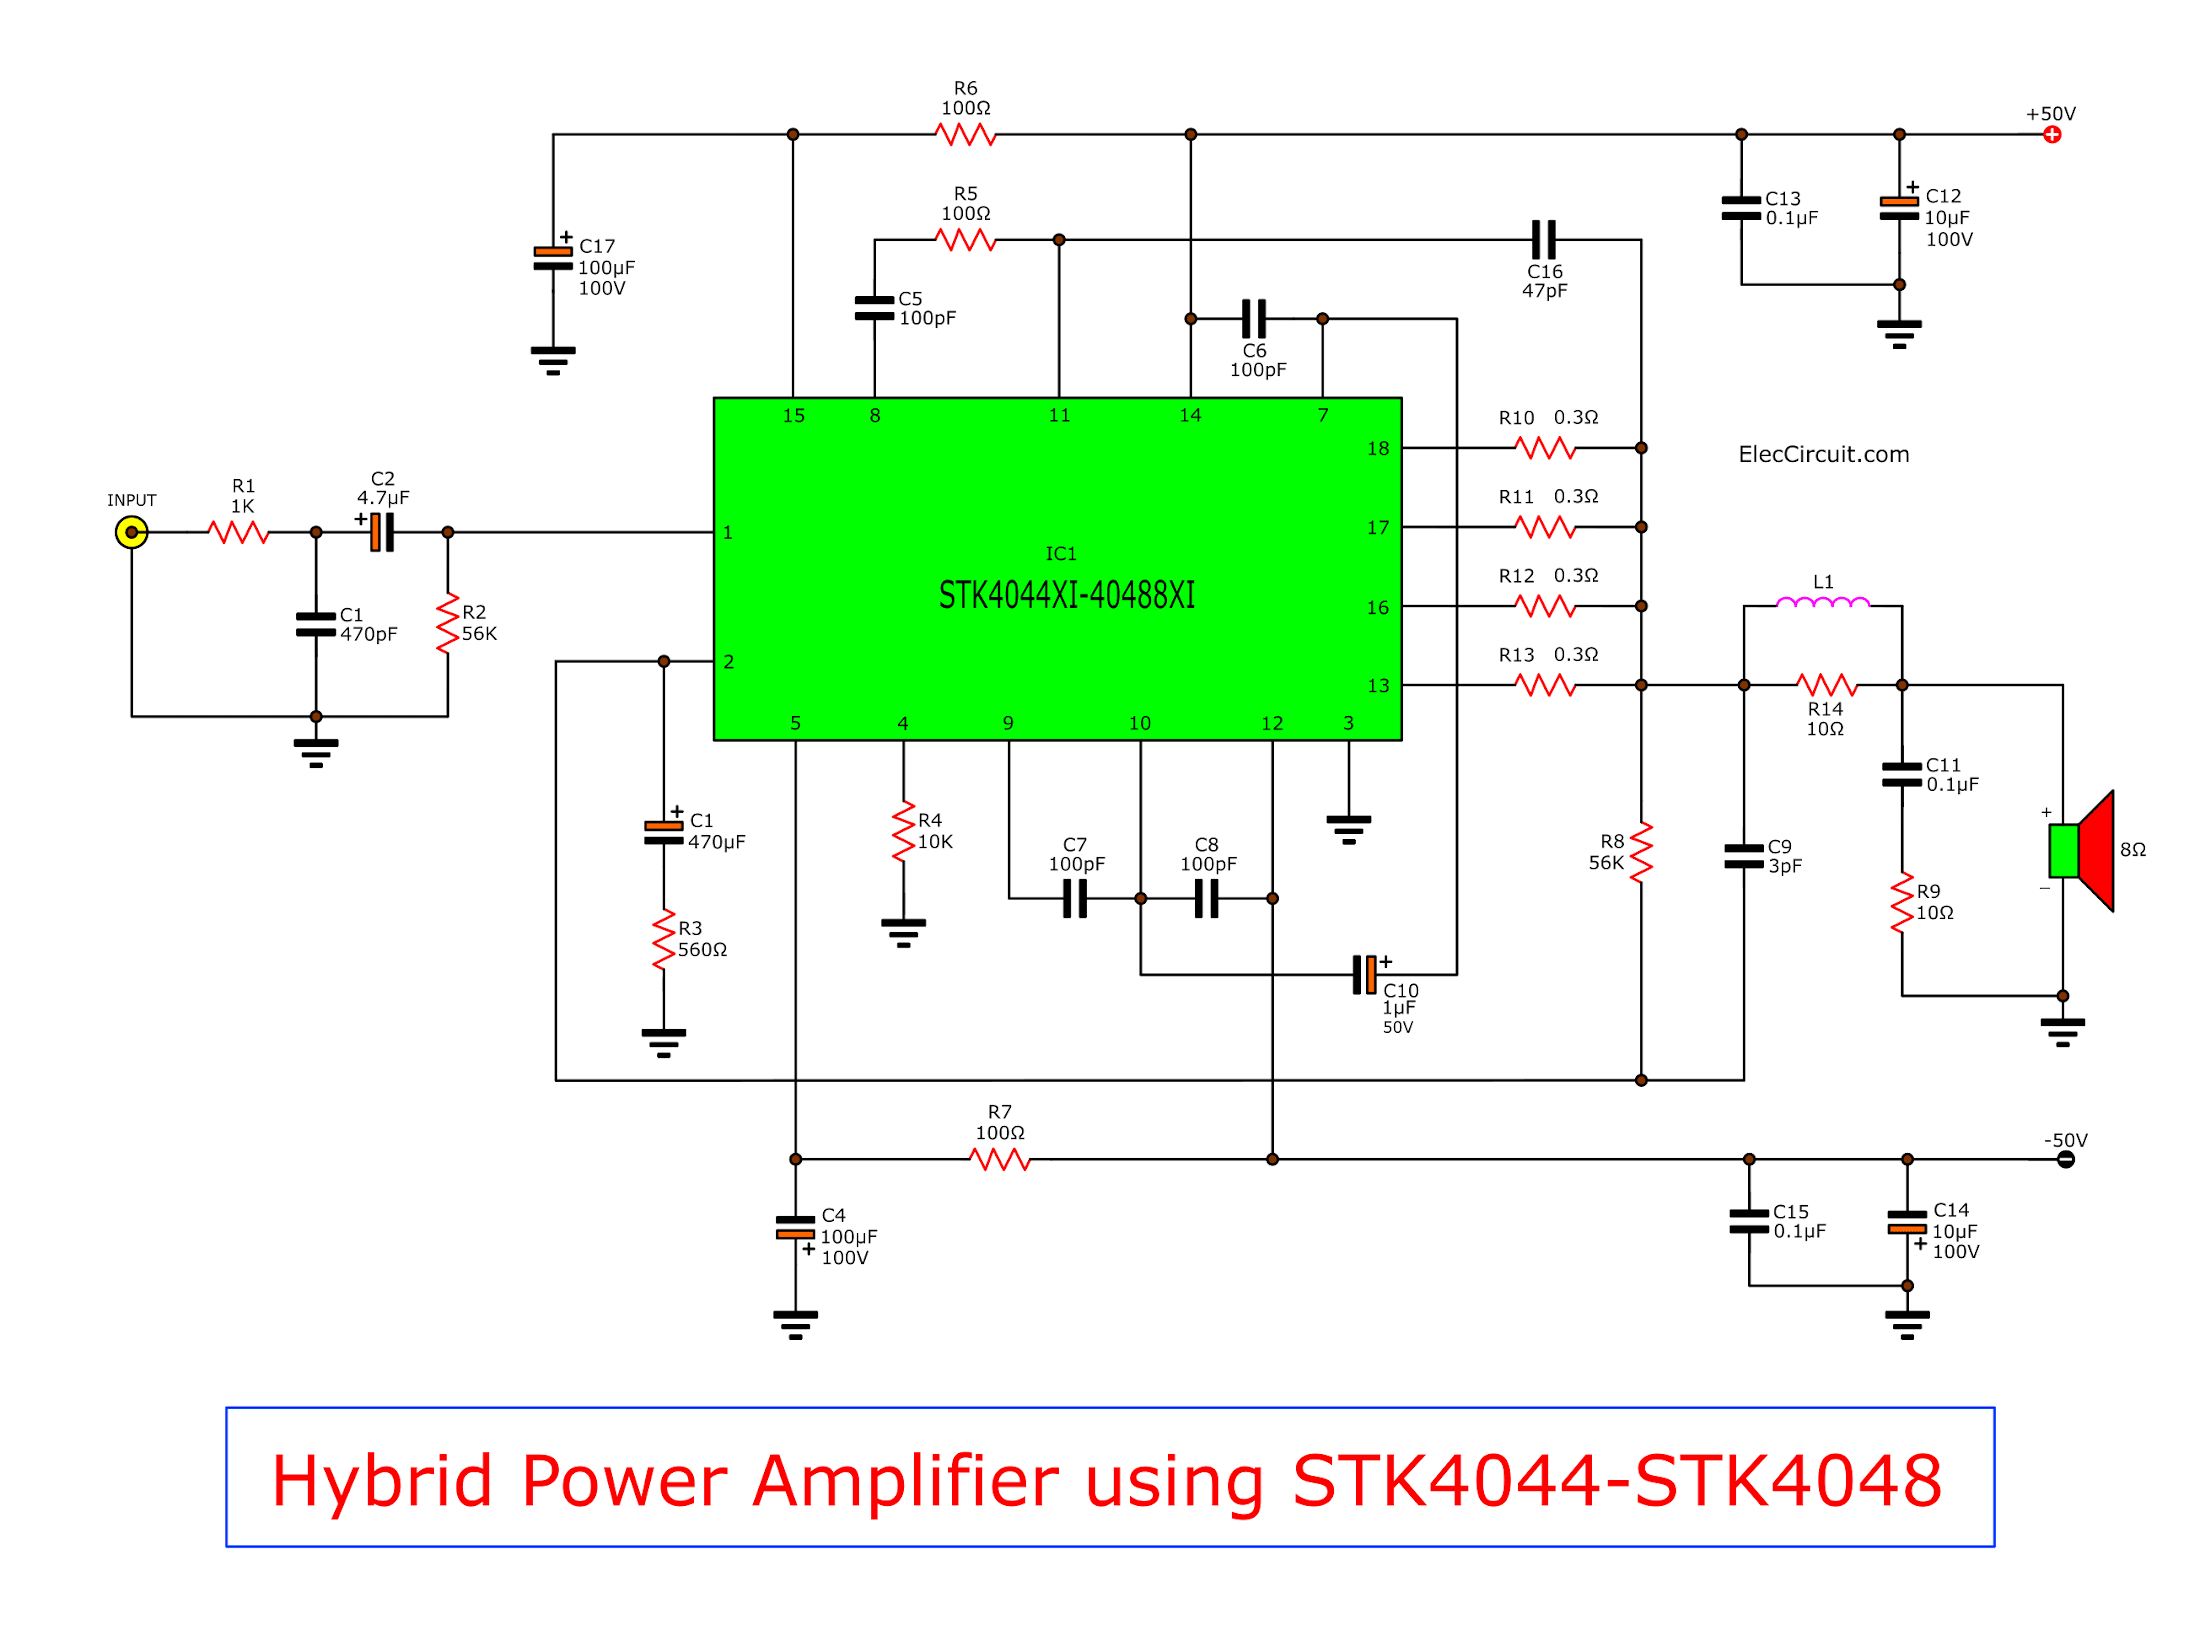 Hybrid power amplifier circuit,100W-150W using STK-4048